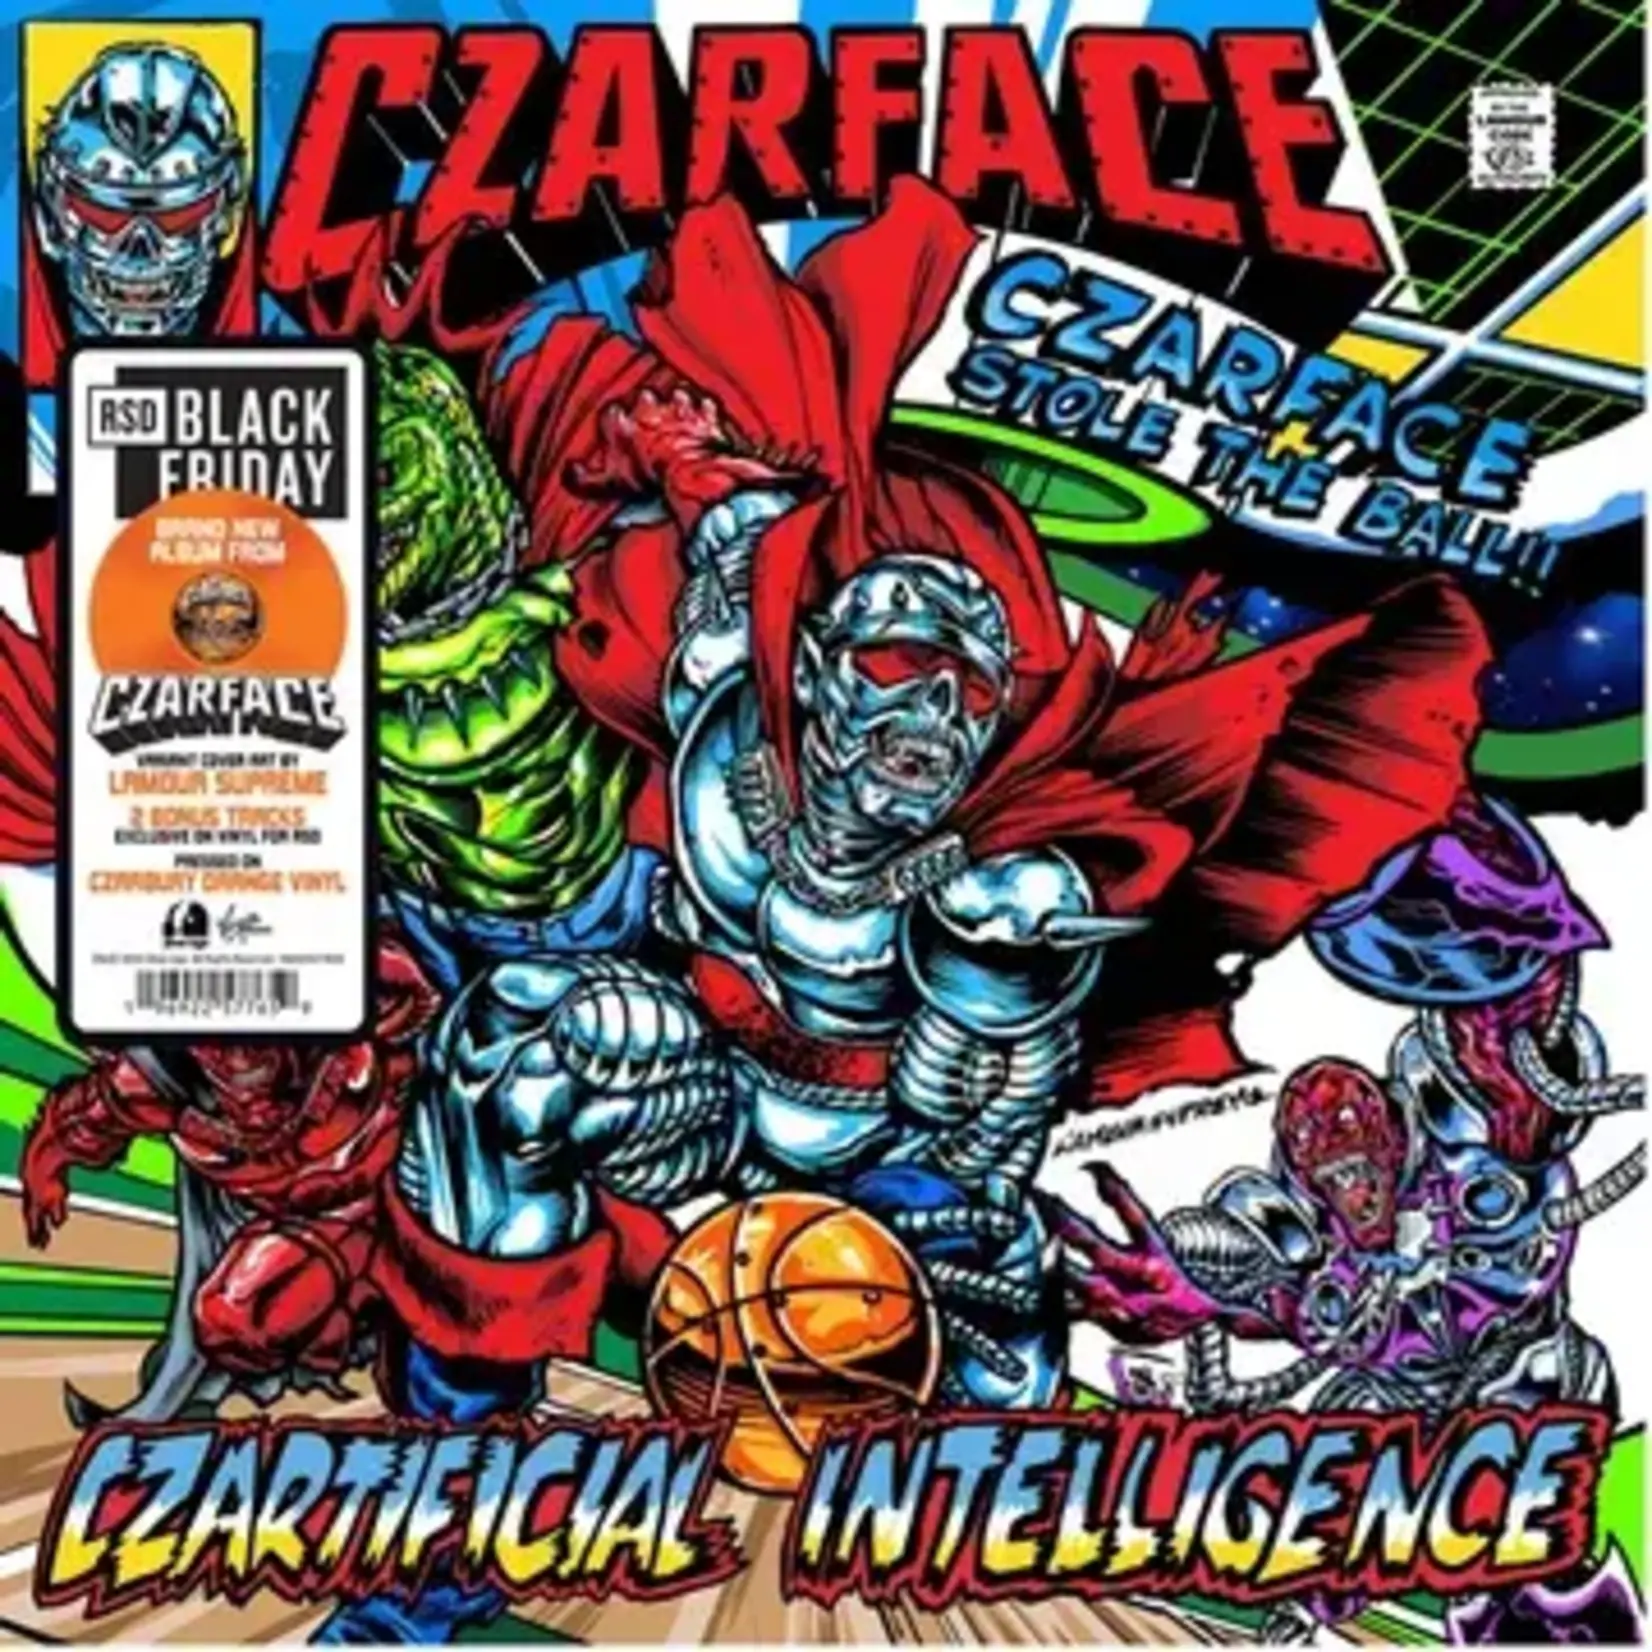 RSD Black Friday Czarface - Czartificial Intelligence: Stole The Ball Edition (LP+Comic)